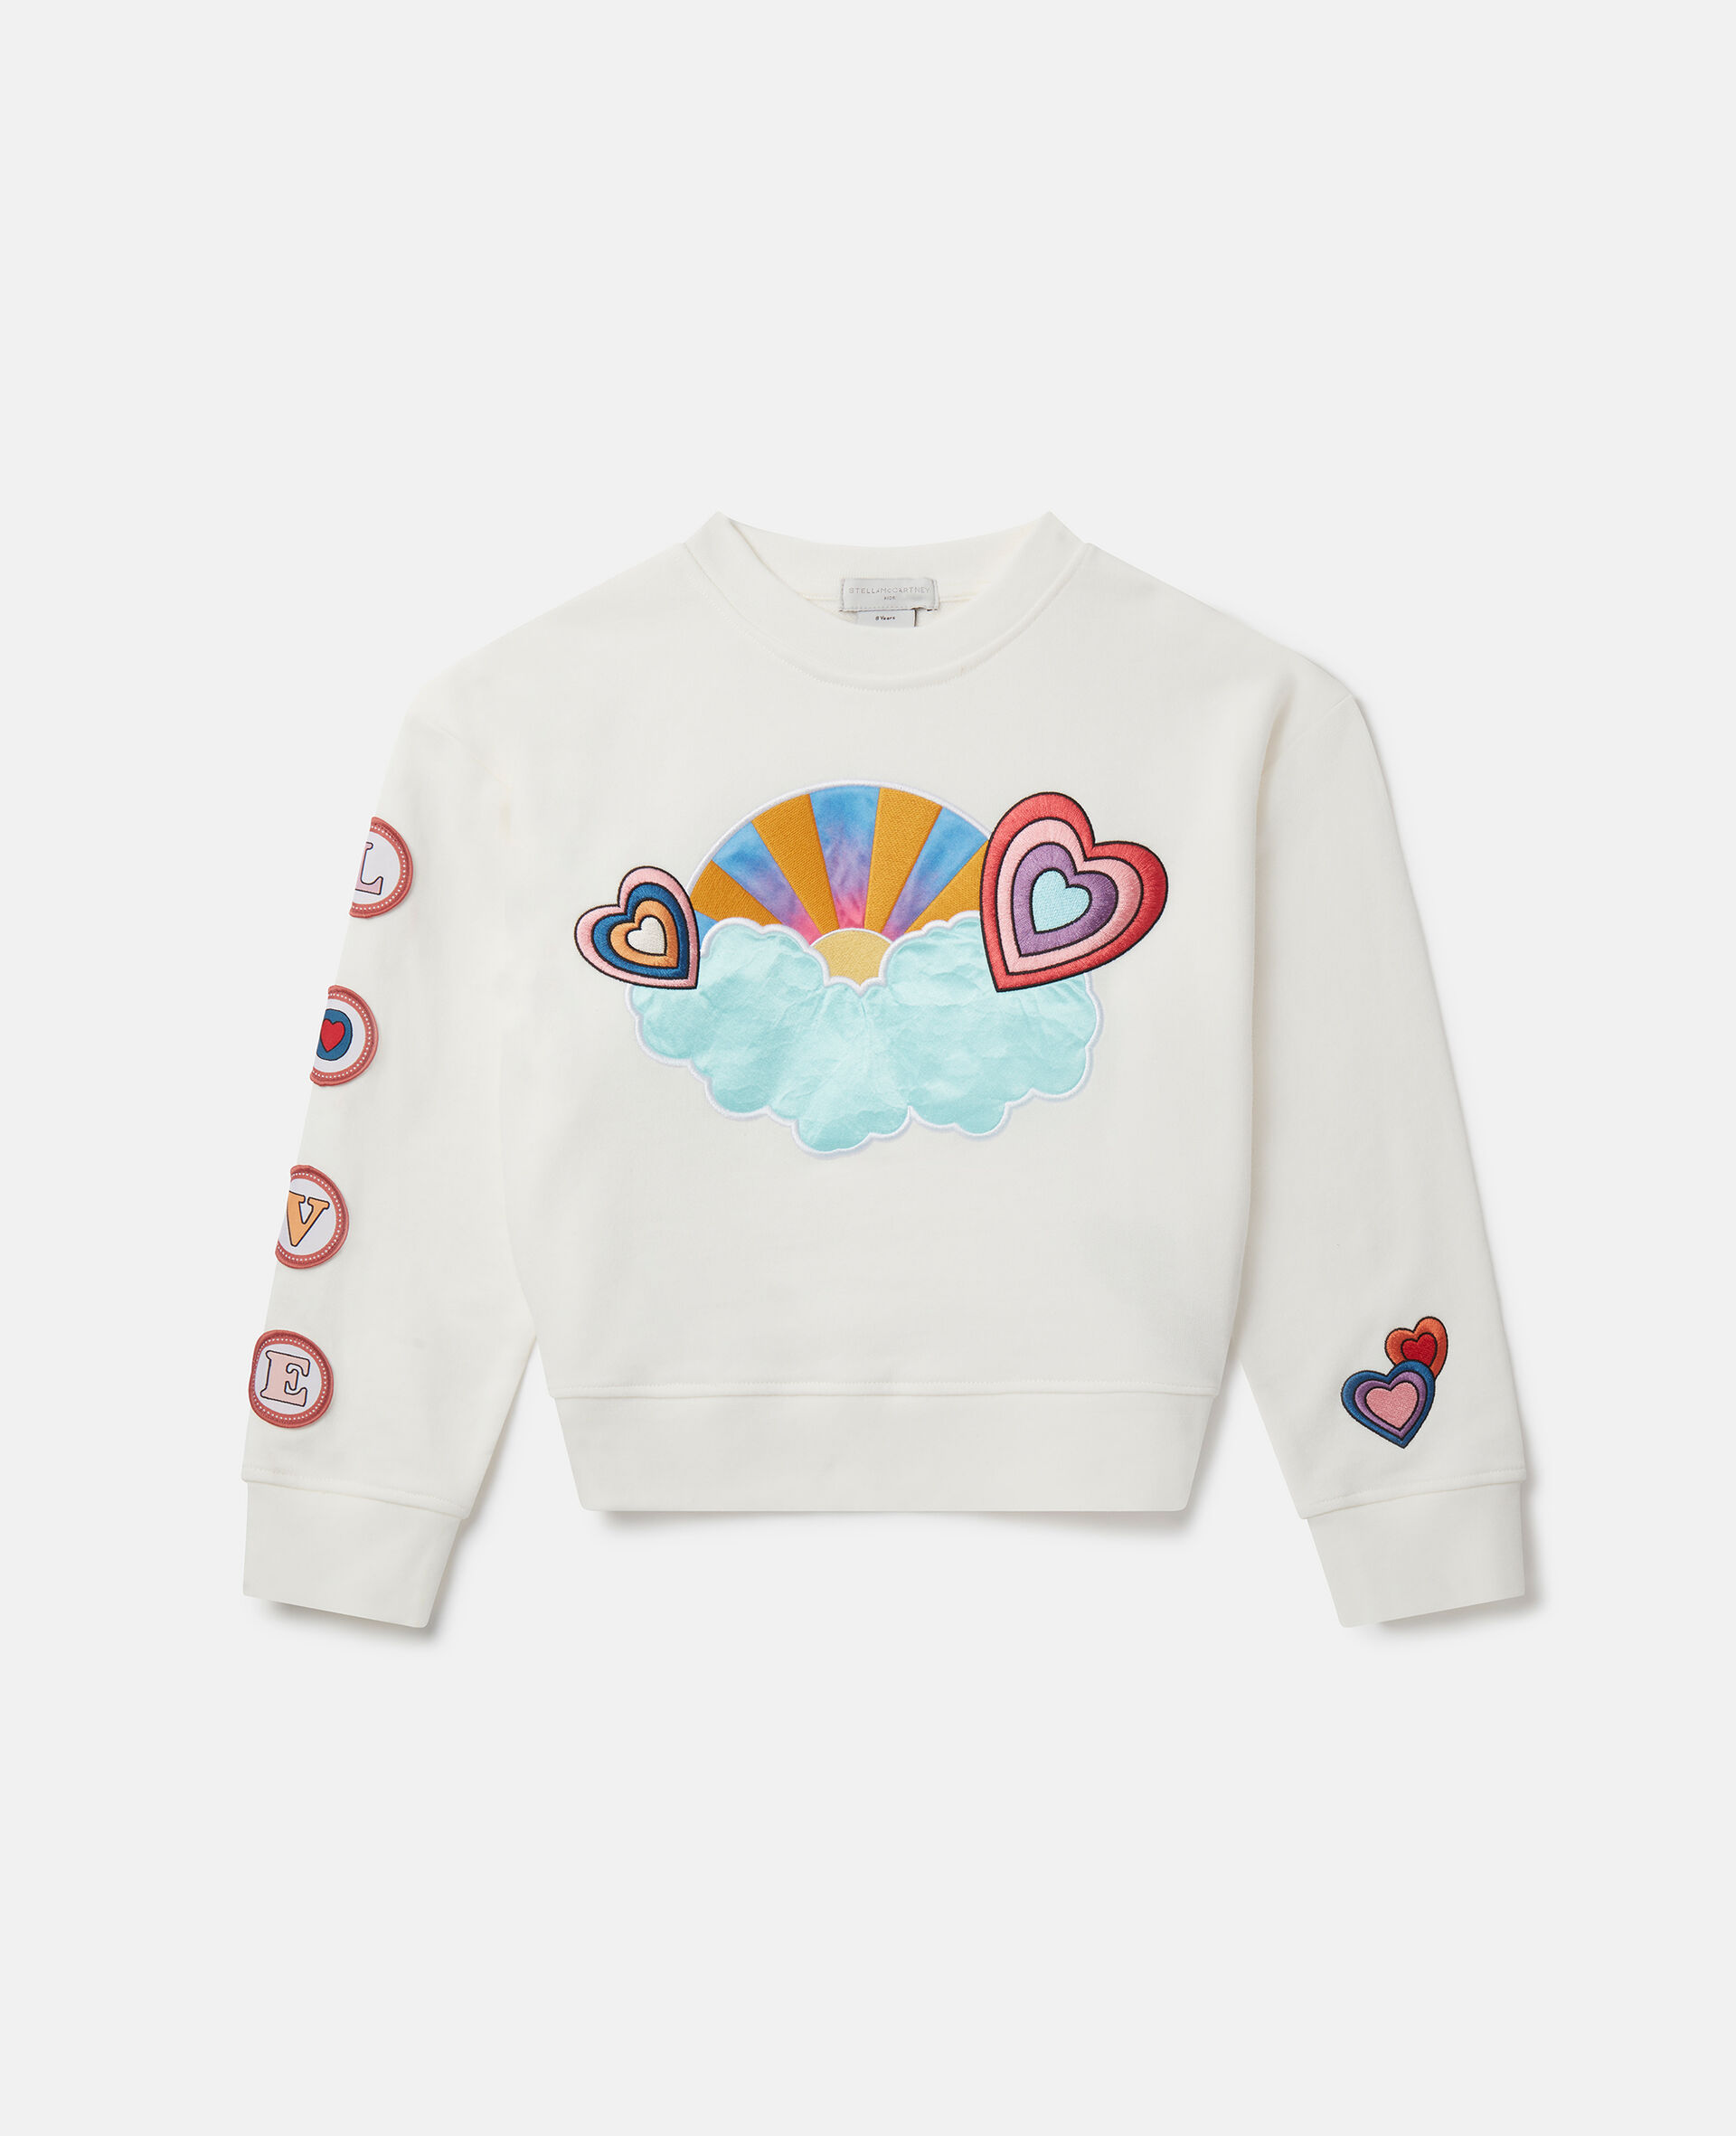 I Love You Embroidered Sweatshirt-Multicolour-medium